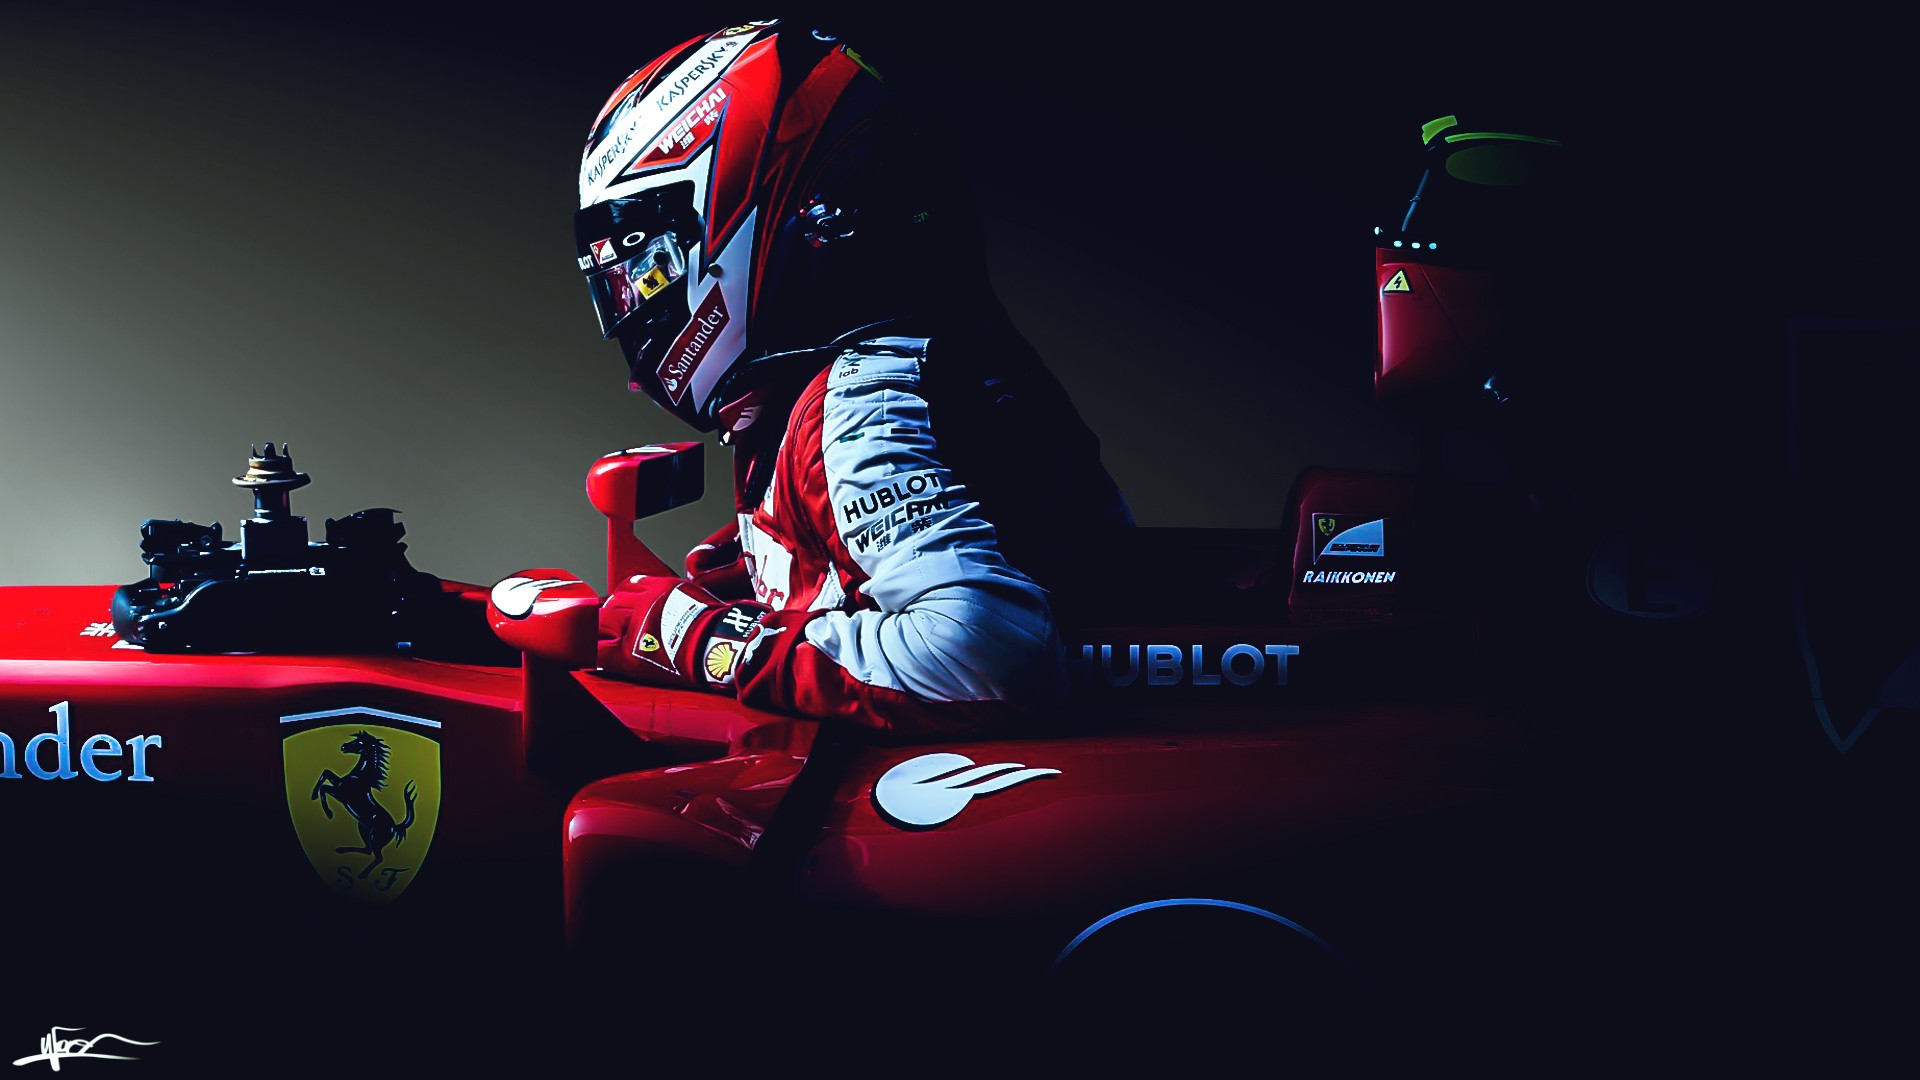 General 1920x1080 Kimi Raikkonen Scuderia Ferrari Formula 1 ferrari formula 1 dark helmet motorsport sport red cars car 2015 (Year) Racing driver finnish